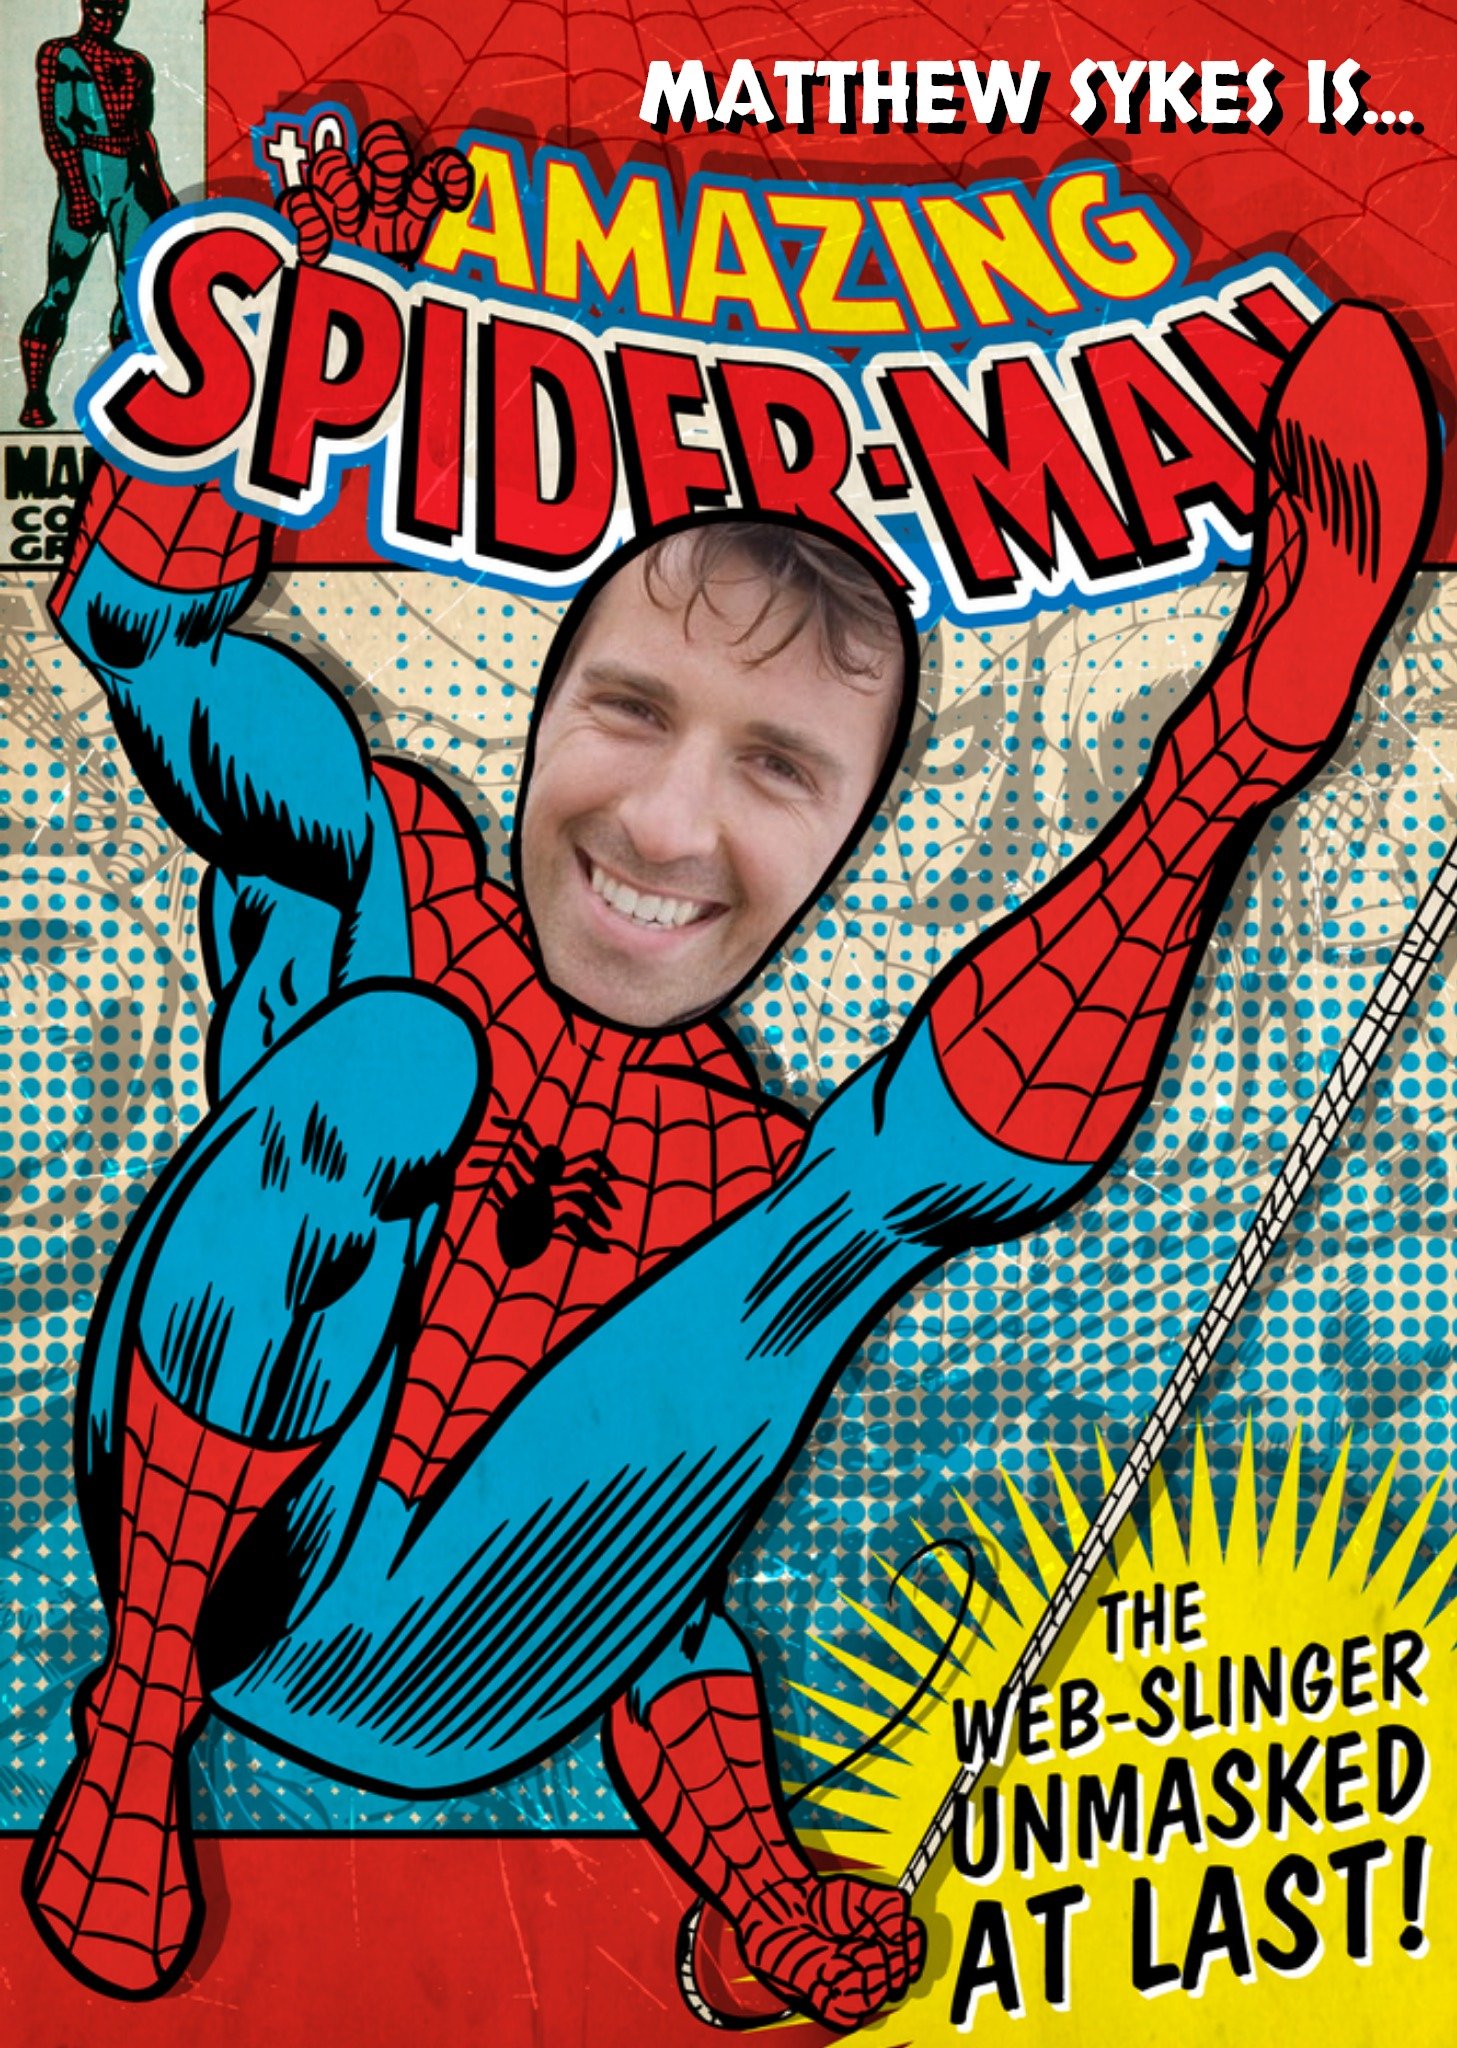 Marvel Spiderman Photo Birthday Card, Large